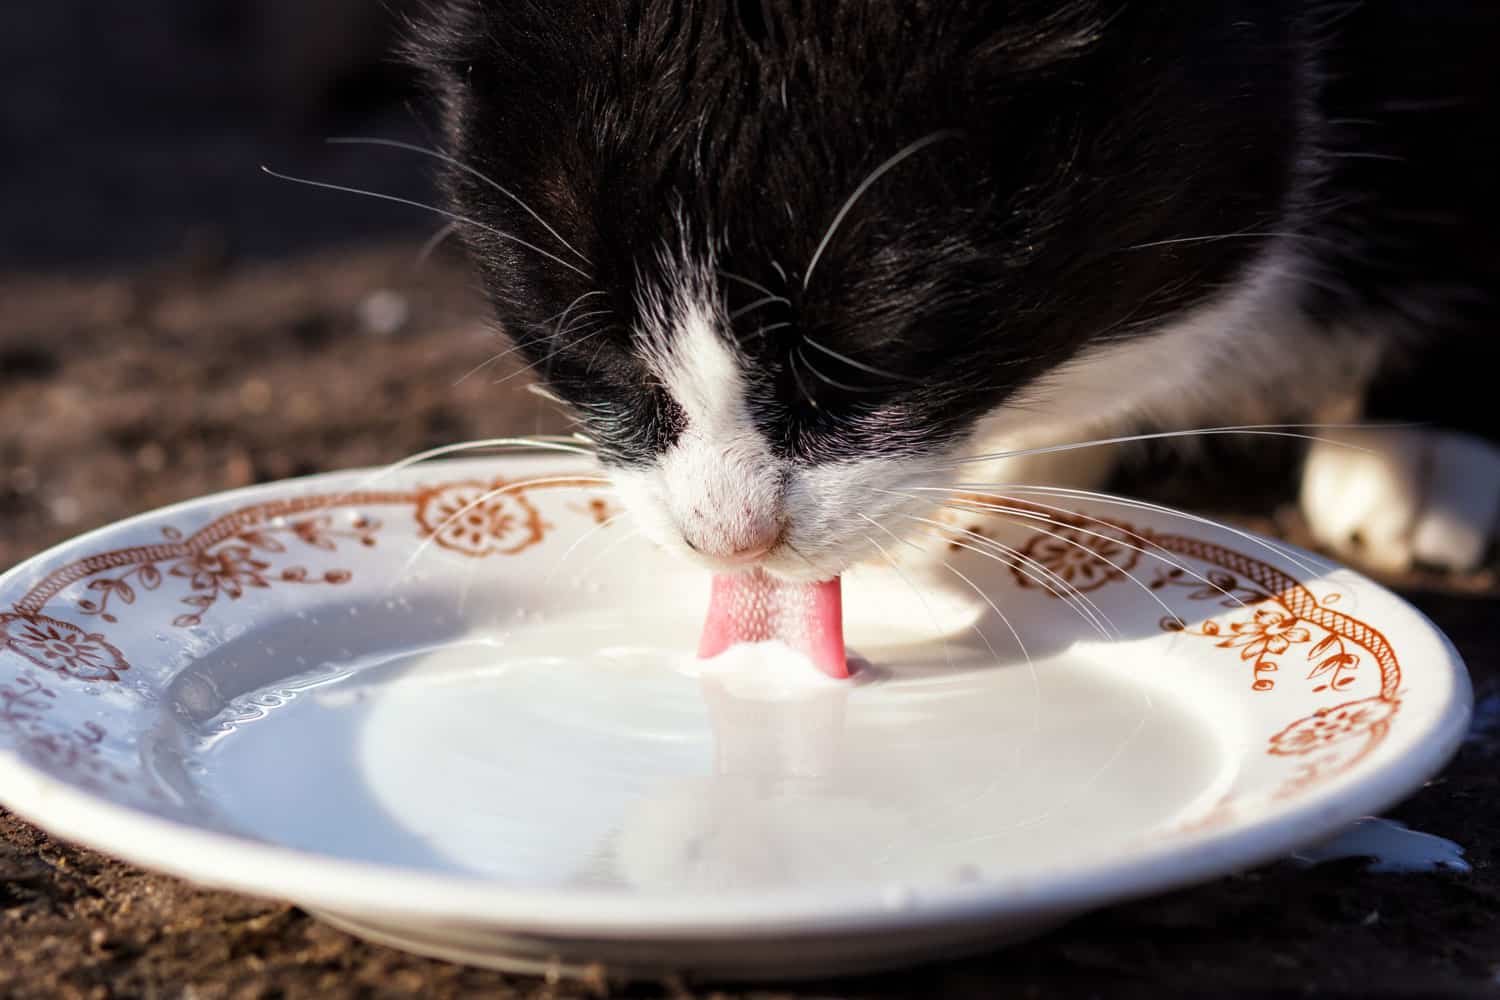 A black cat drinking milk 